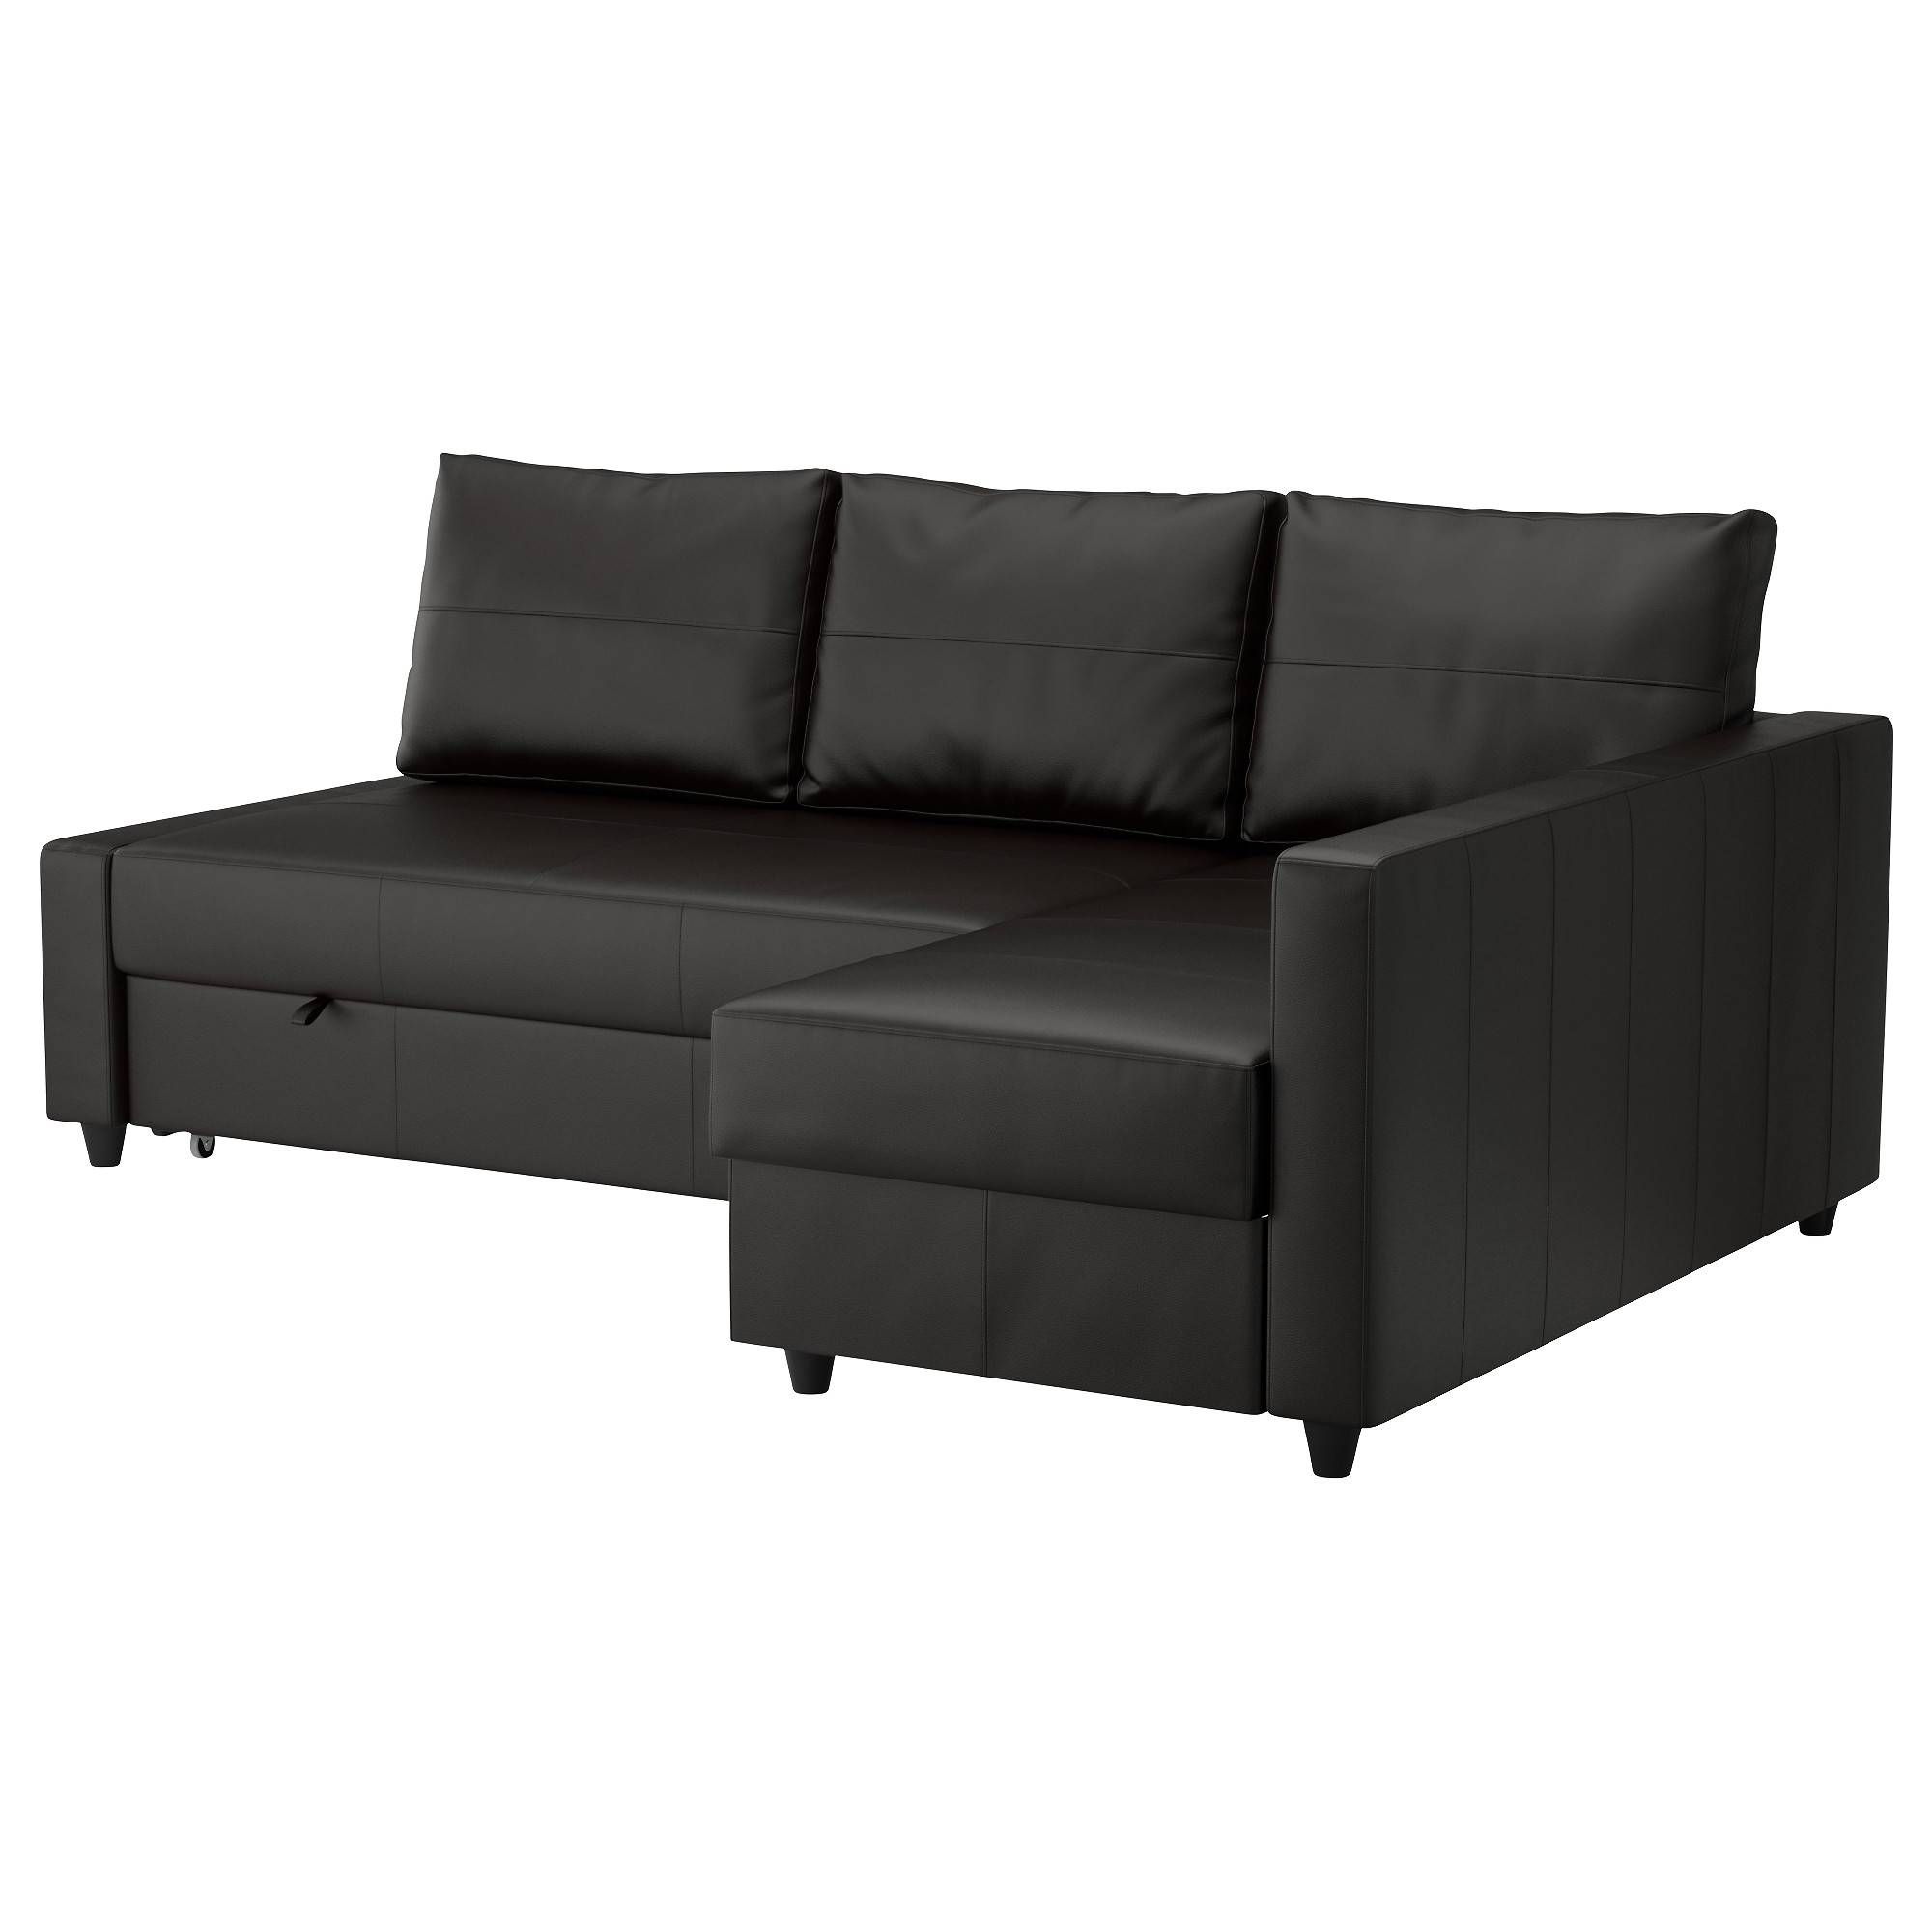 Friheten Sleeper Sectional,3 Seat W/storage – Bomstad Black – Ikea For Storage Sofa Ikea (View 13 of 25)